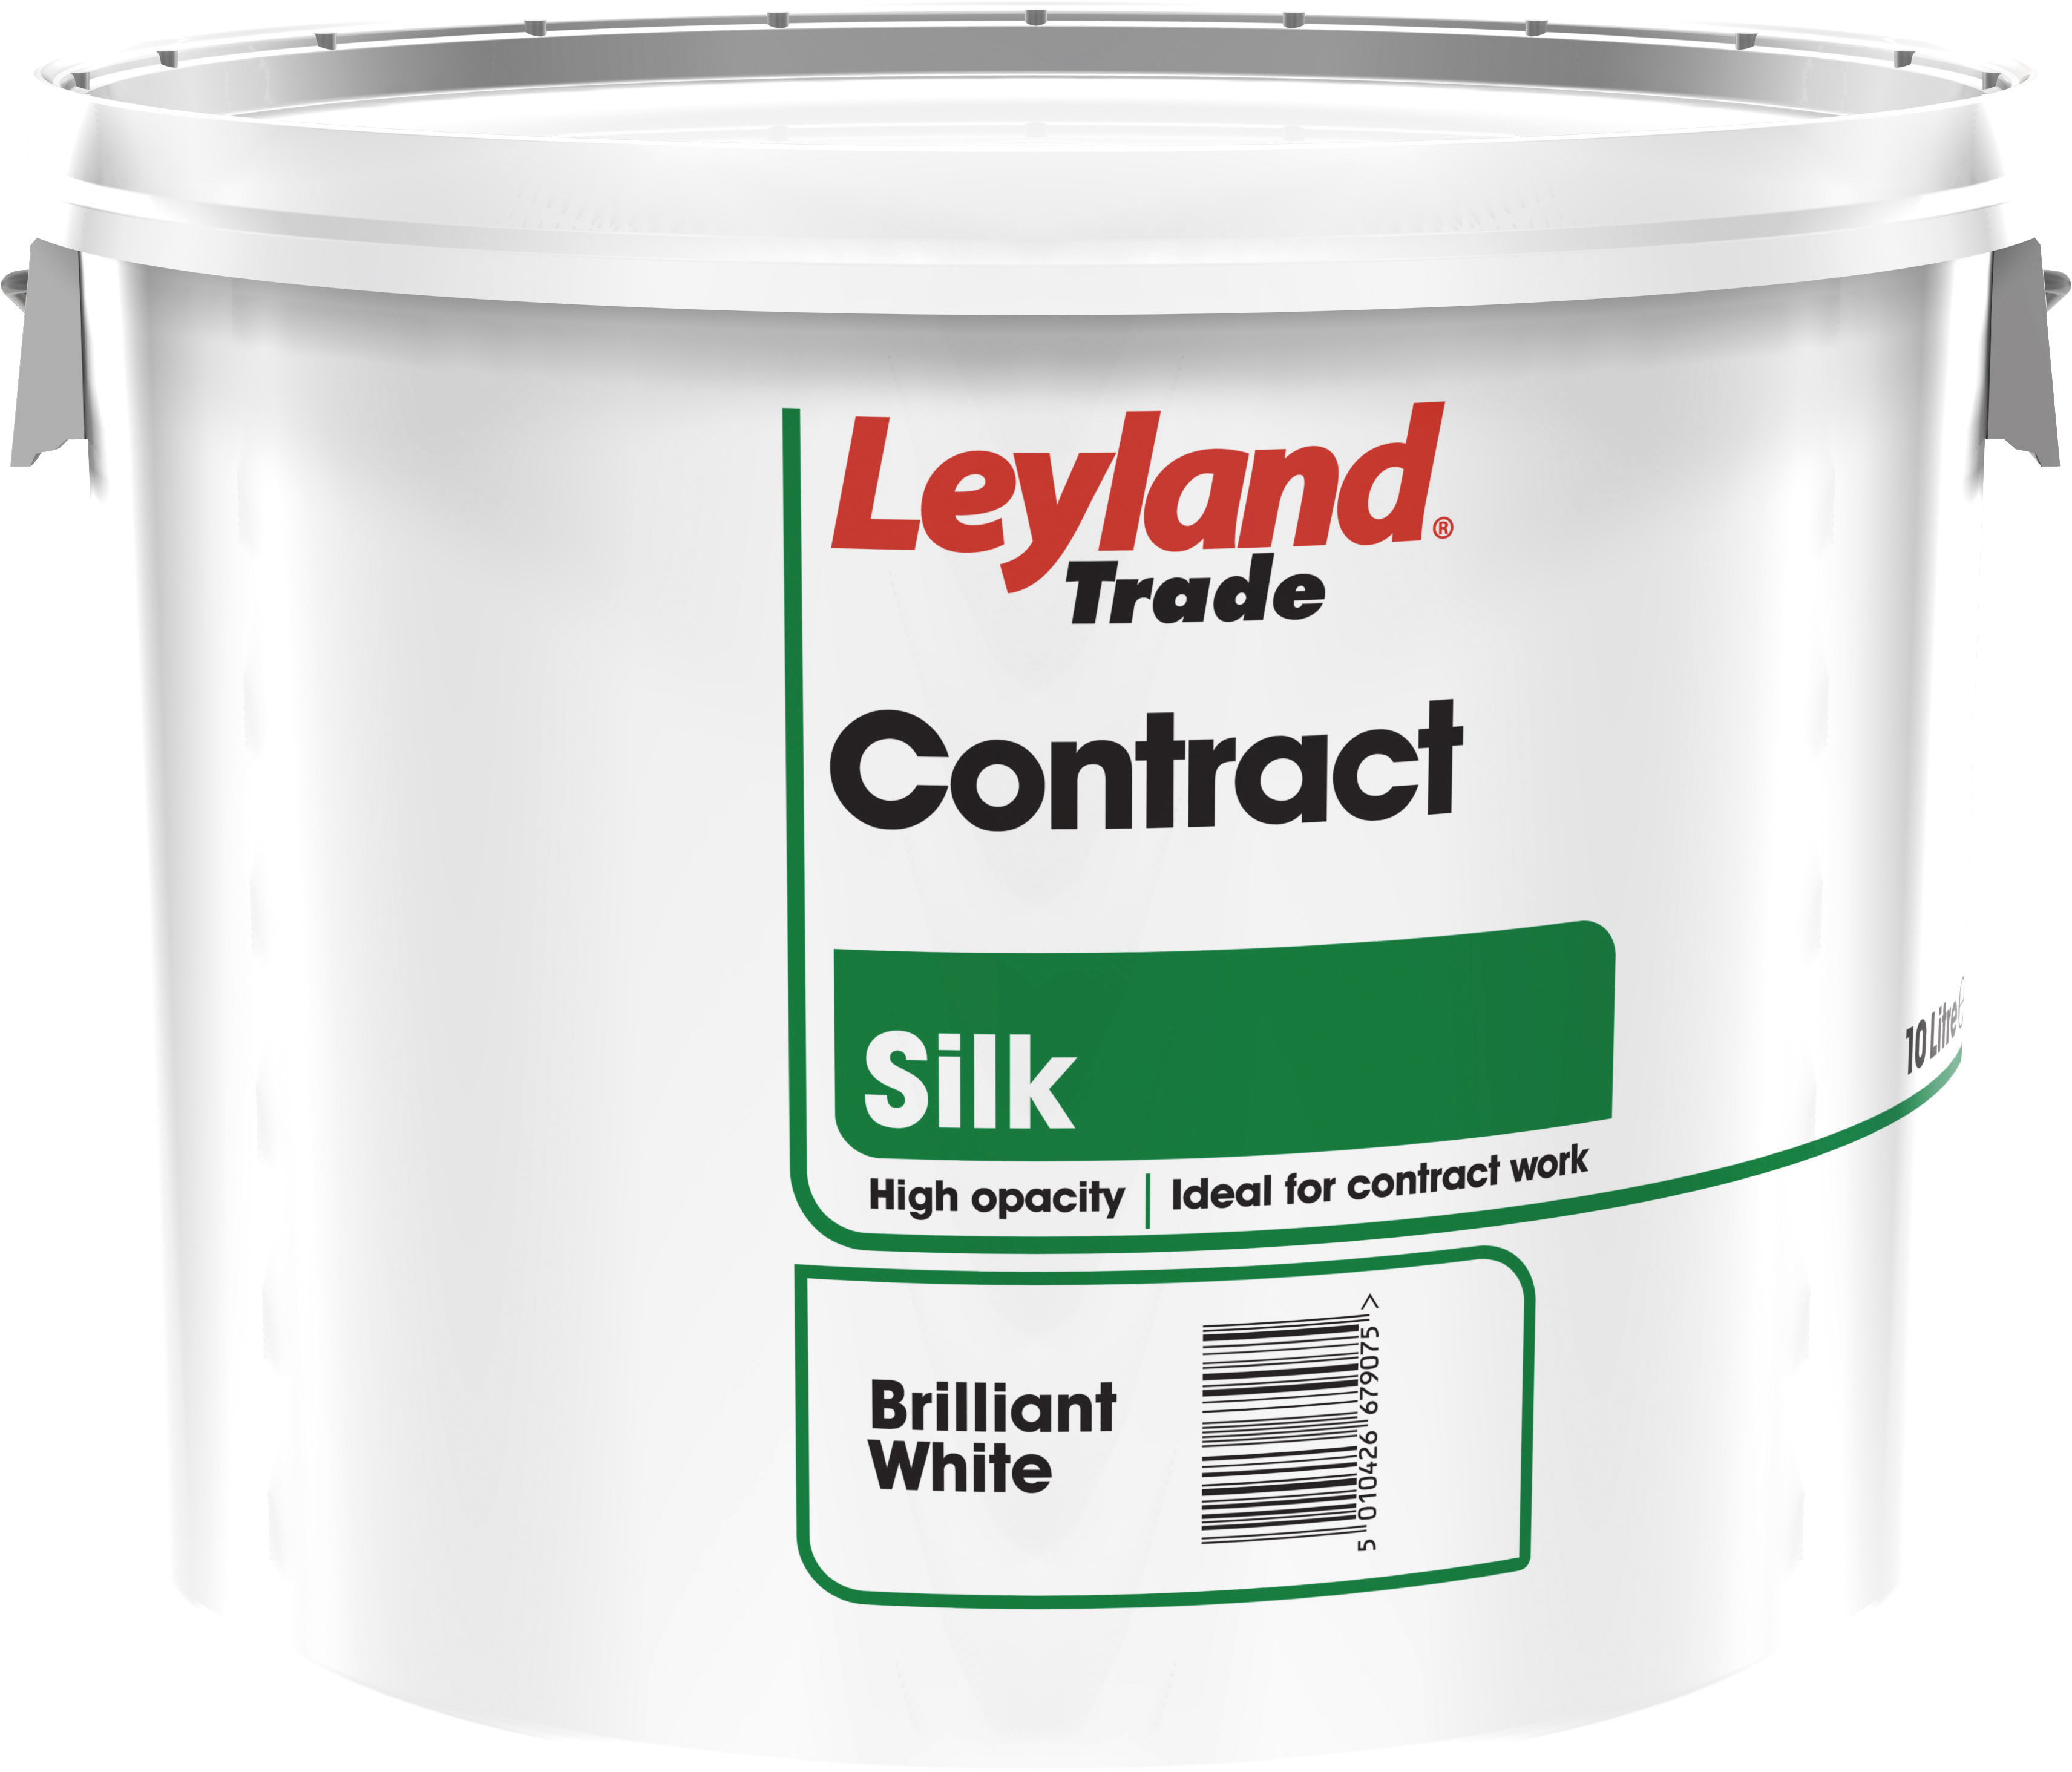 Leyland Contract Silk